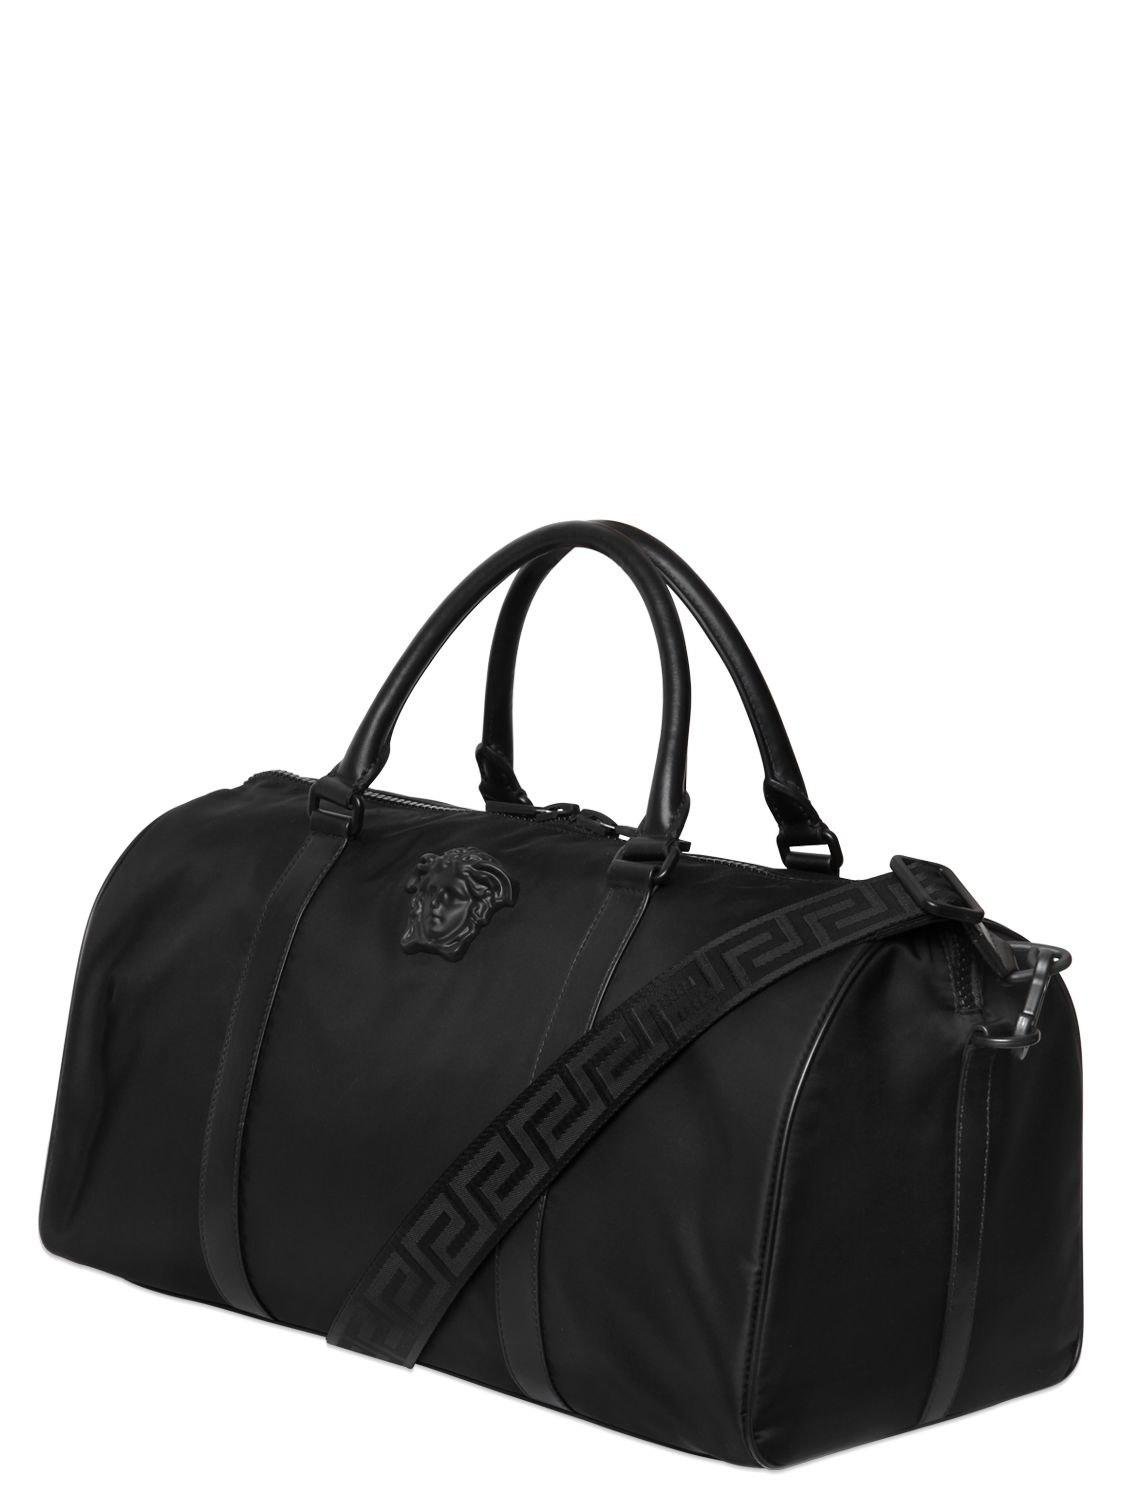 Versace Tote Bag Holdall Weekender Black Metallic Gold Medusa Handbag RARE  NEW